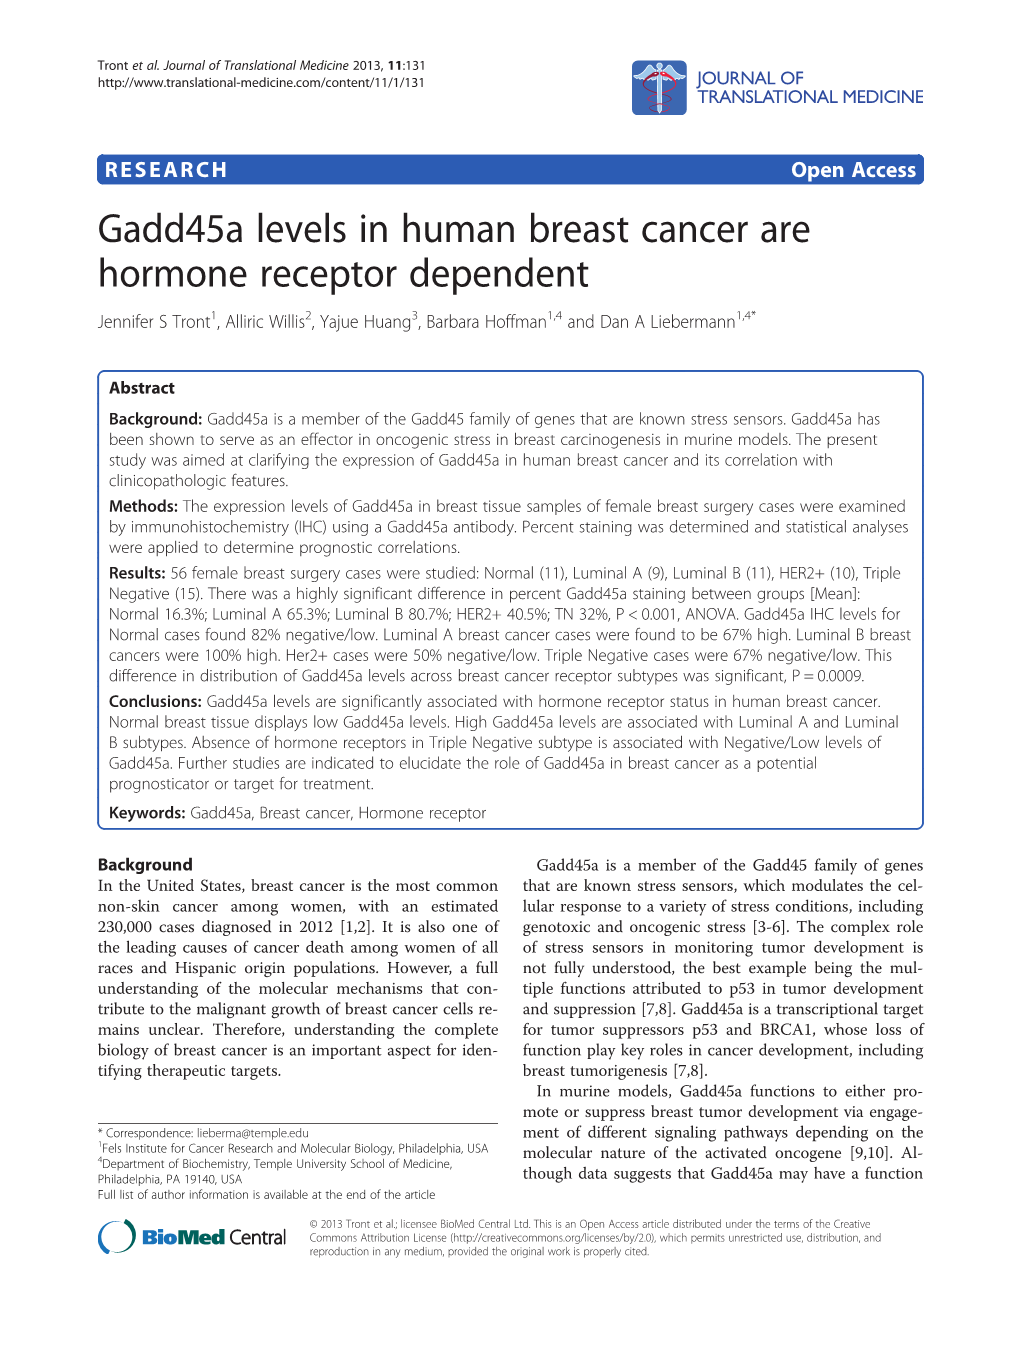 Gadd45a Levels in Human Breast Cancer Are Hormone Receptor Dependent Jennifer S Tront1, Alliric Willis2, Yajue Huang3, Barbara Hoffman1,4 and Dan a Liebermann1,4*